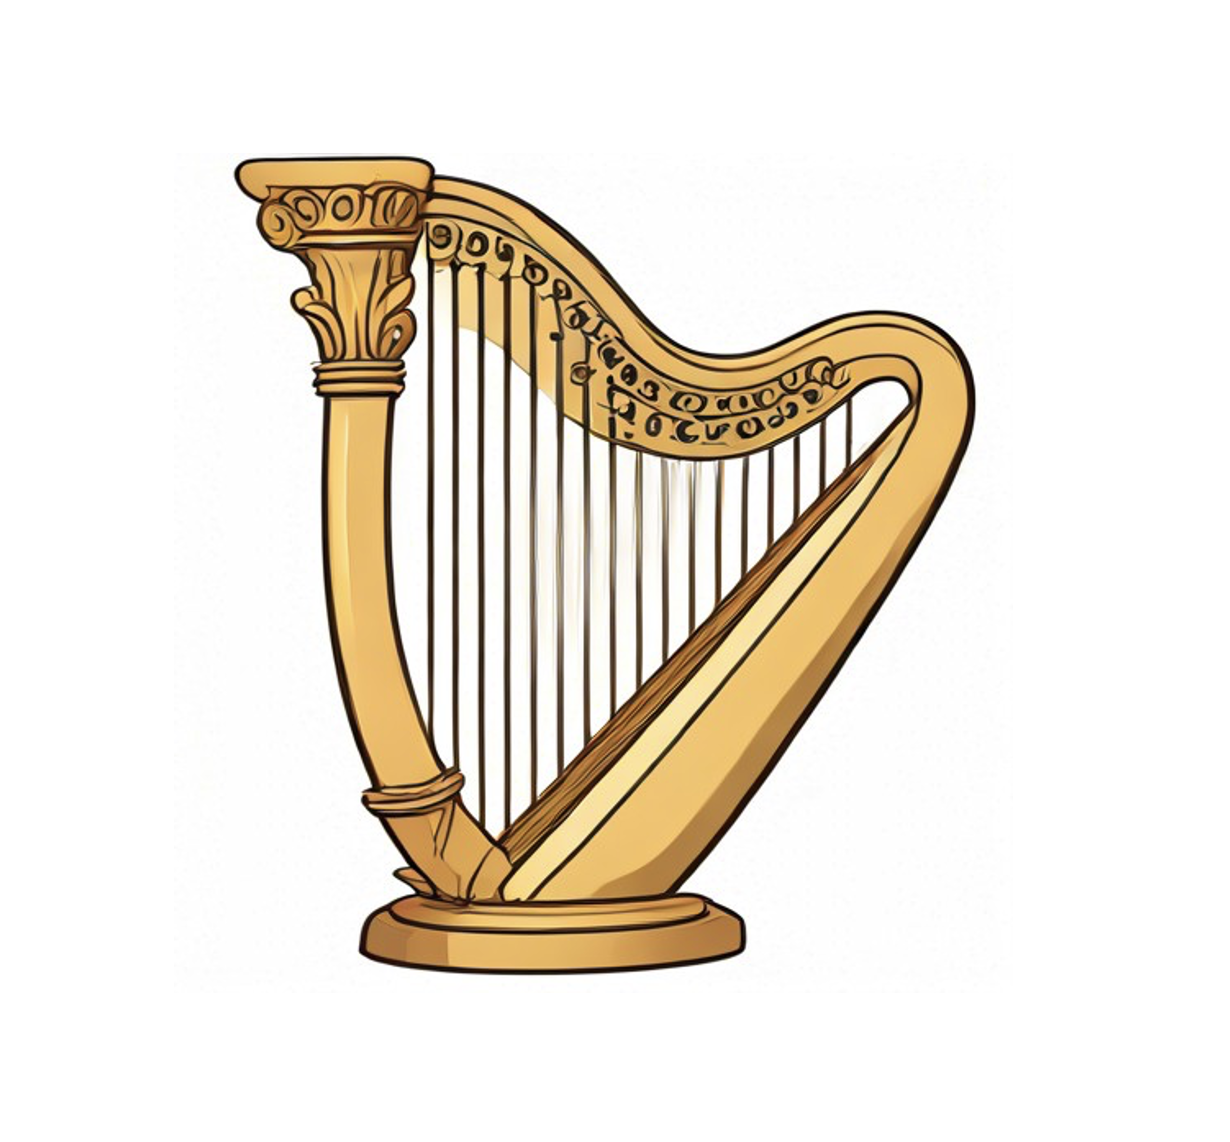 a cartoon harp